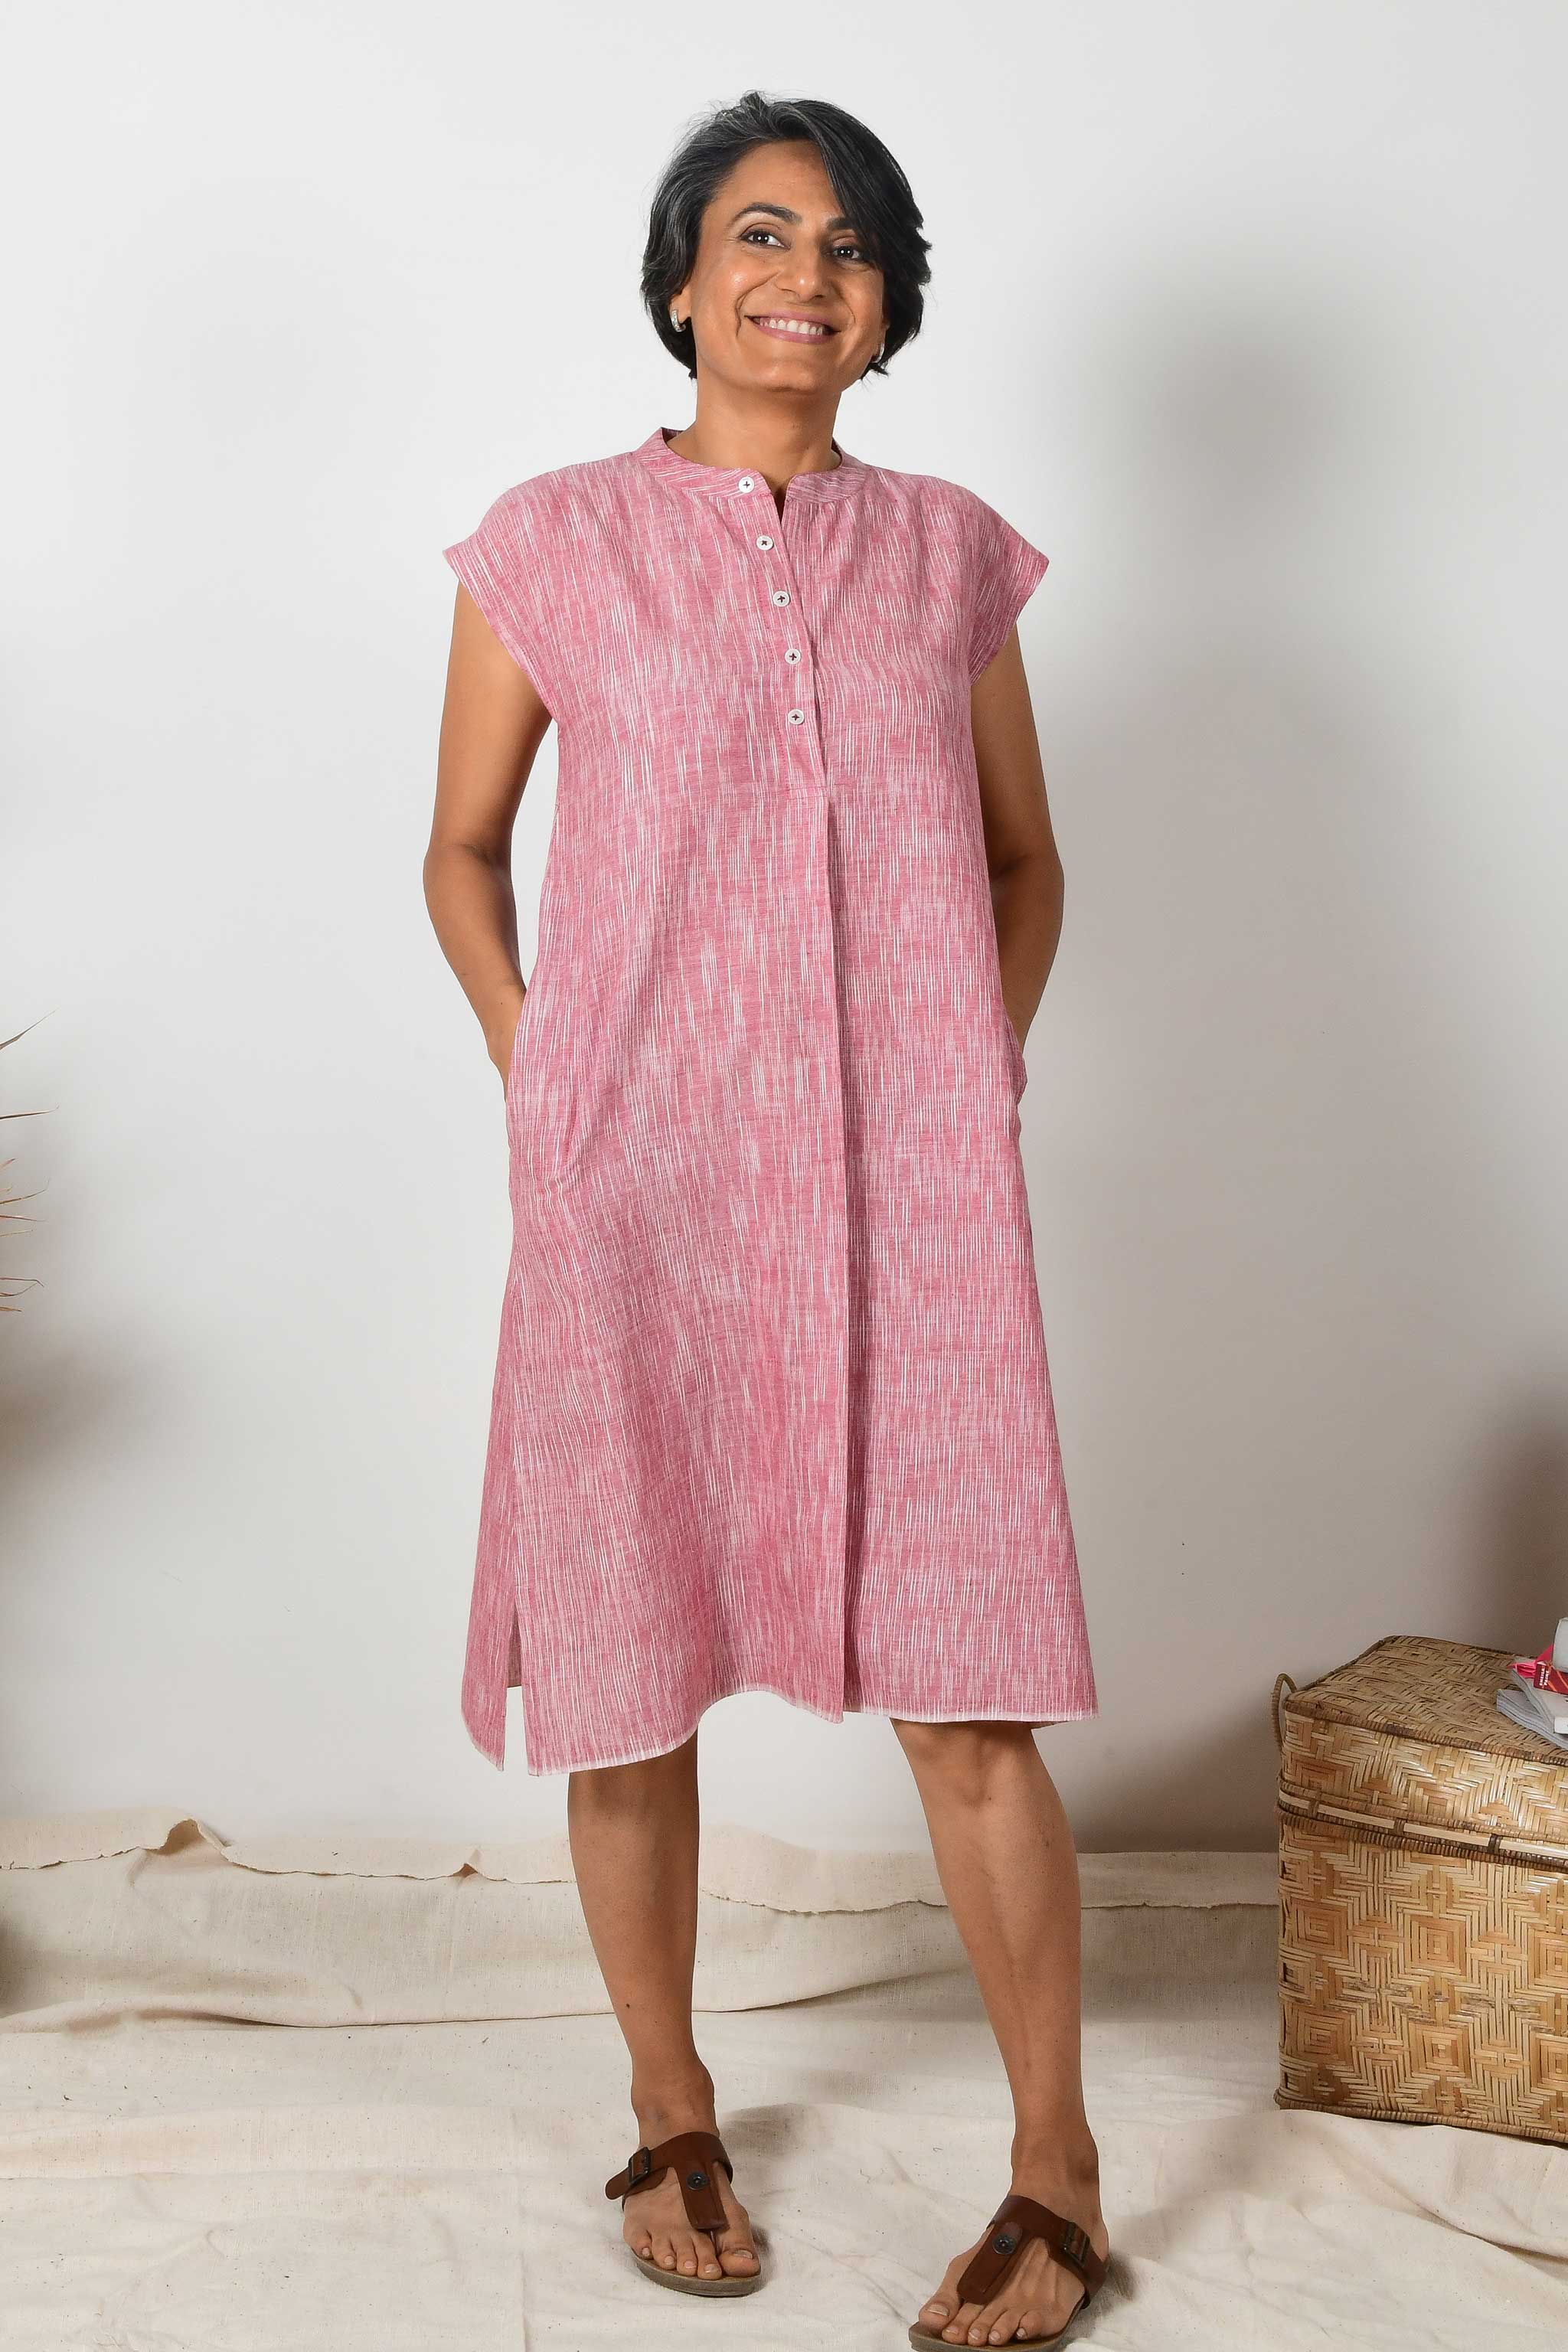 Get Cotton Midi Dress at ₹ 1449 | LBB Shop